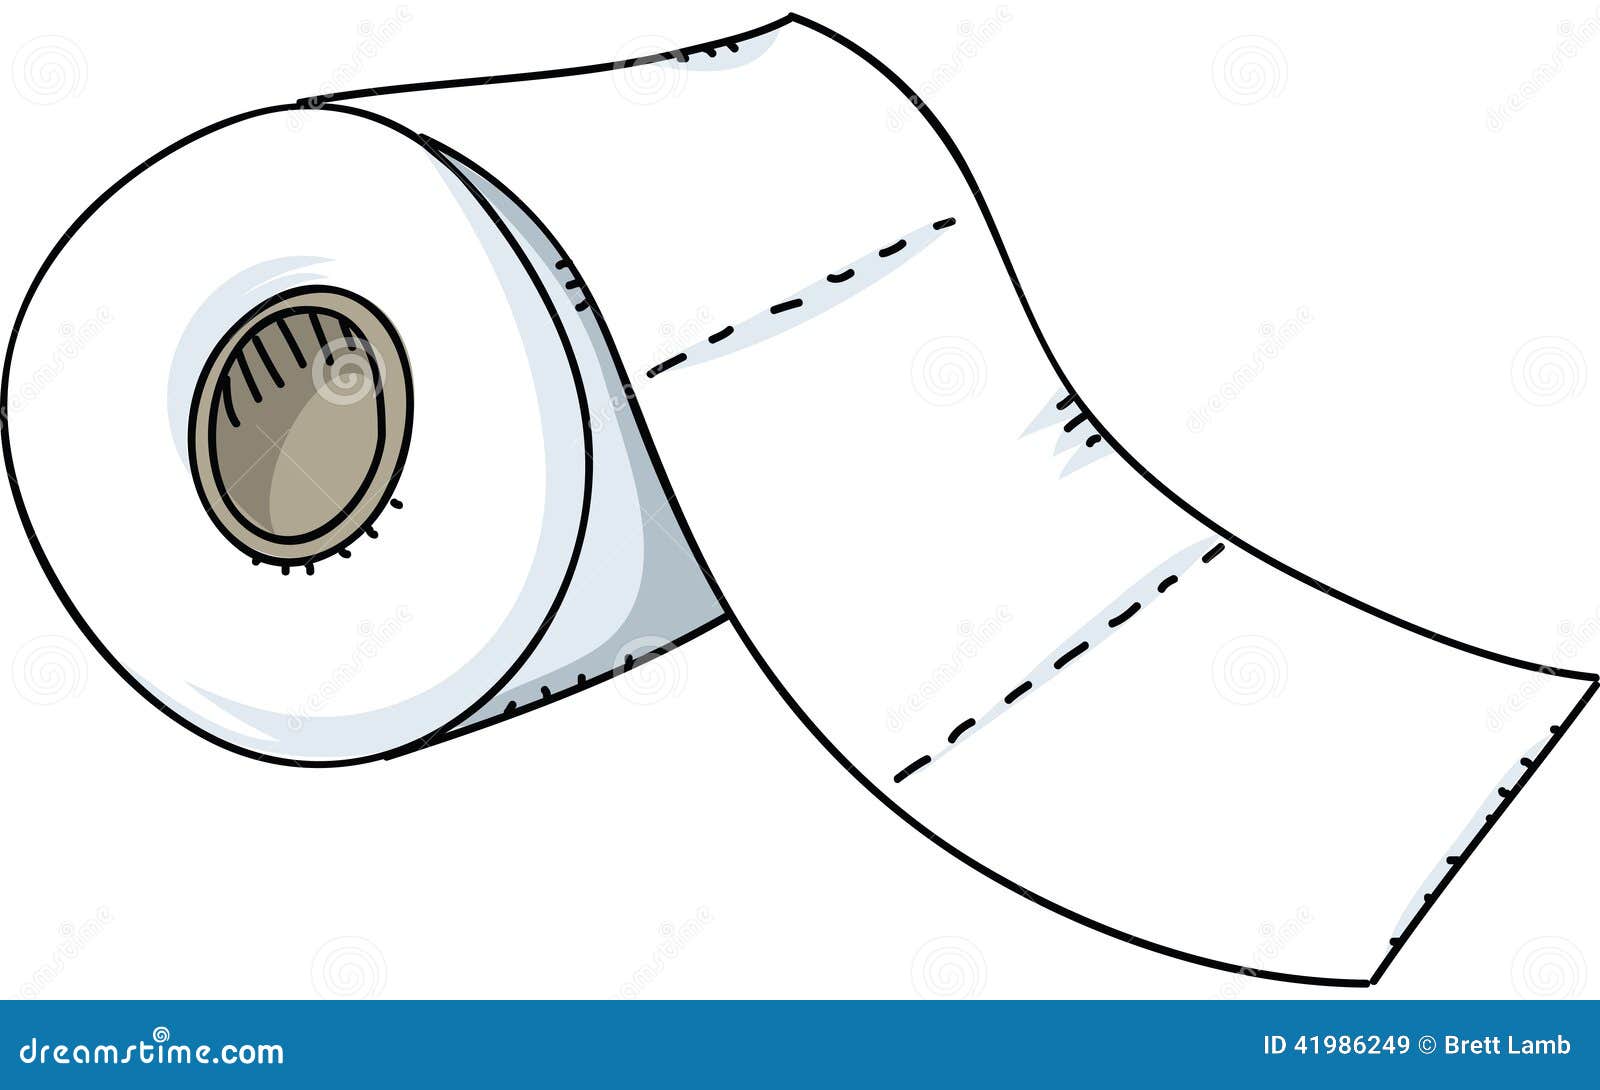 Toilet Paper Roll stock illustration. Illustration of paper - 41986249